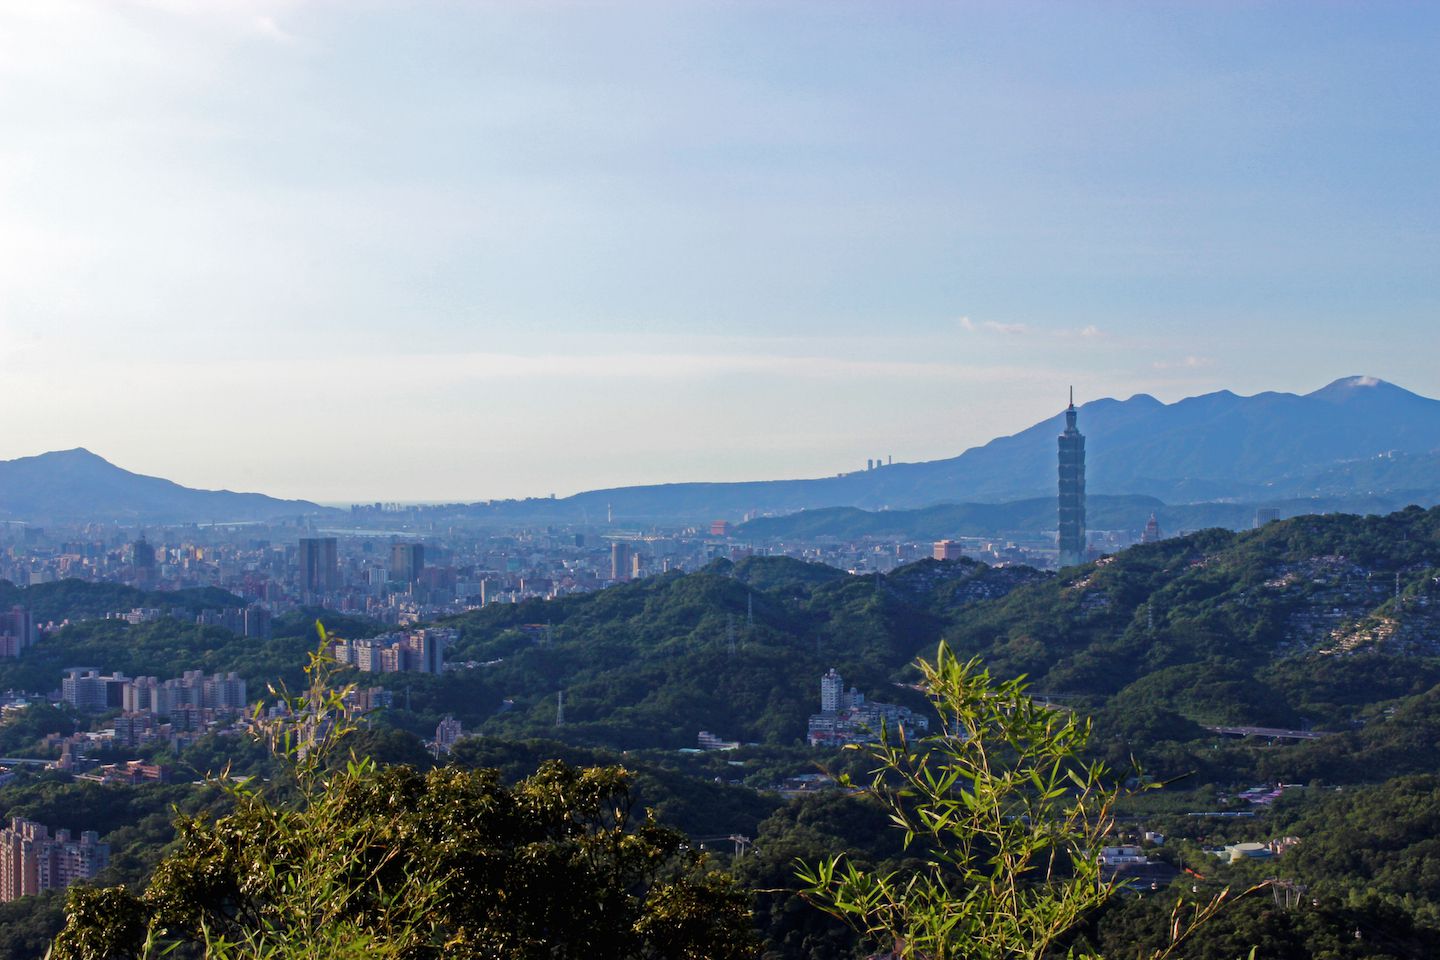 View of Taipei City from the Maokong Gondola